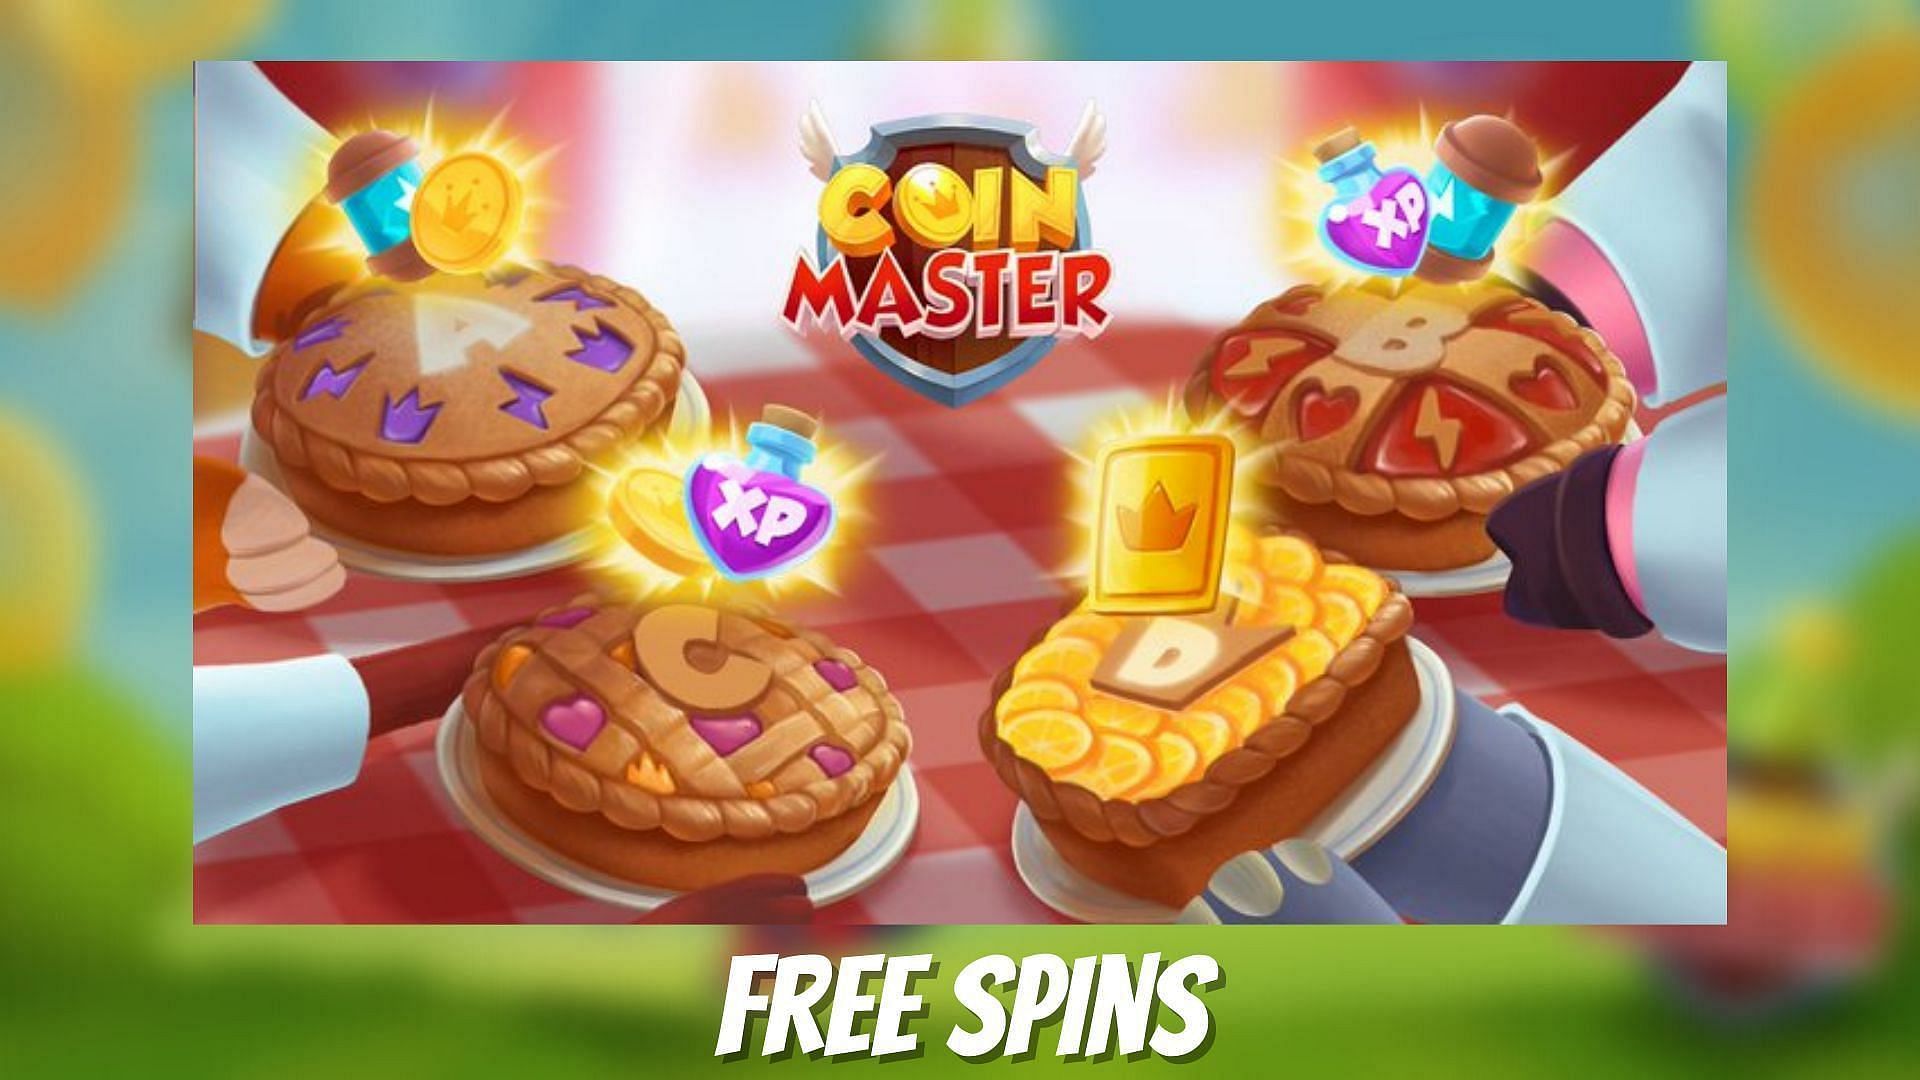 Obtain free spins for Coin Master (Image via Sportskeeda)